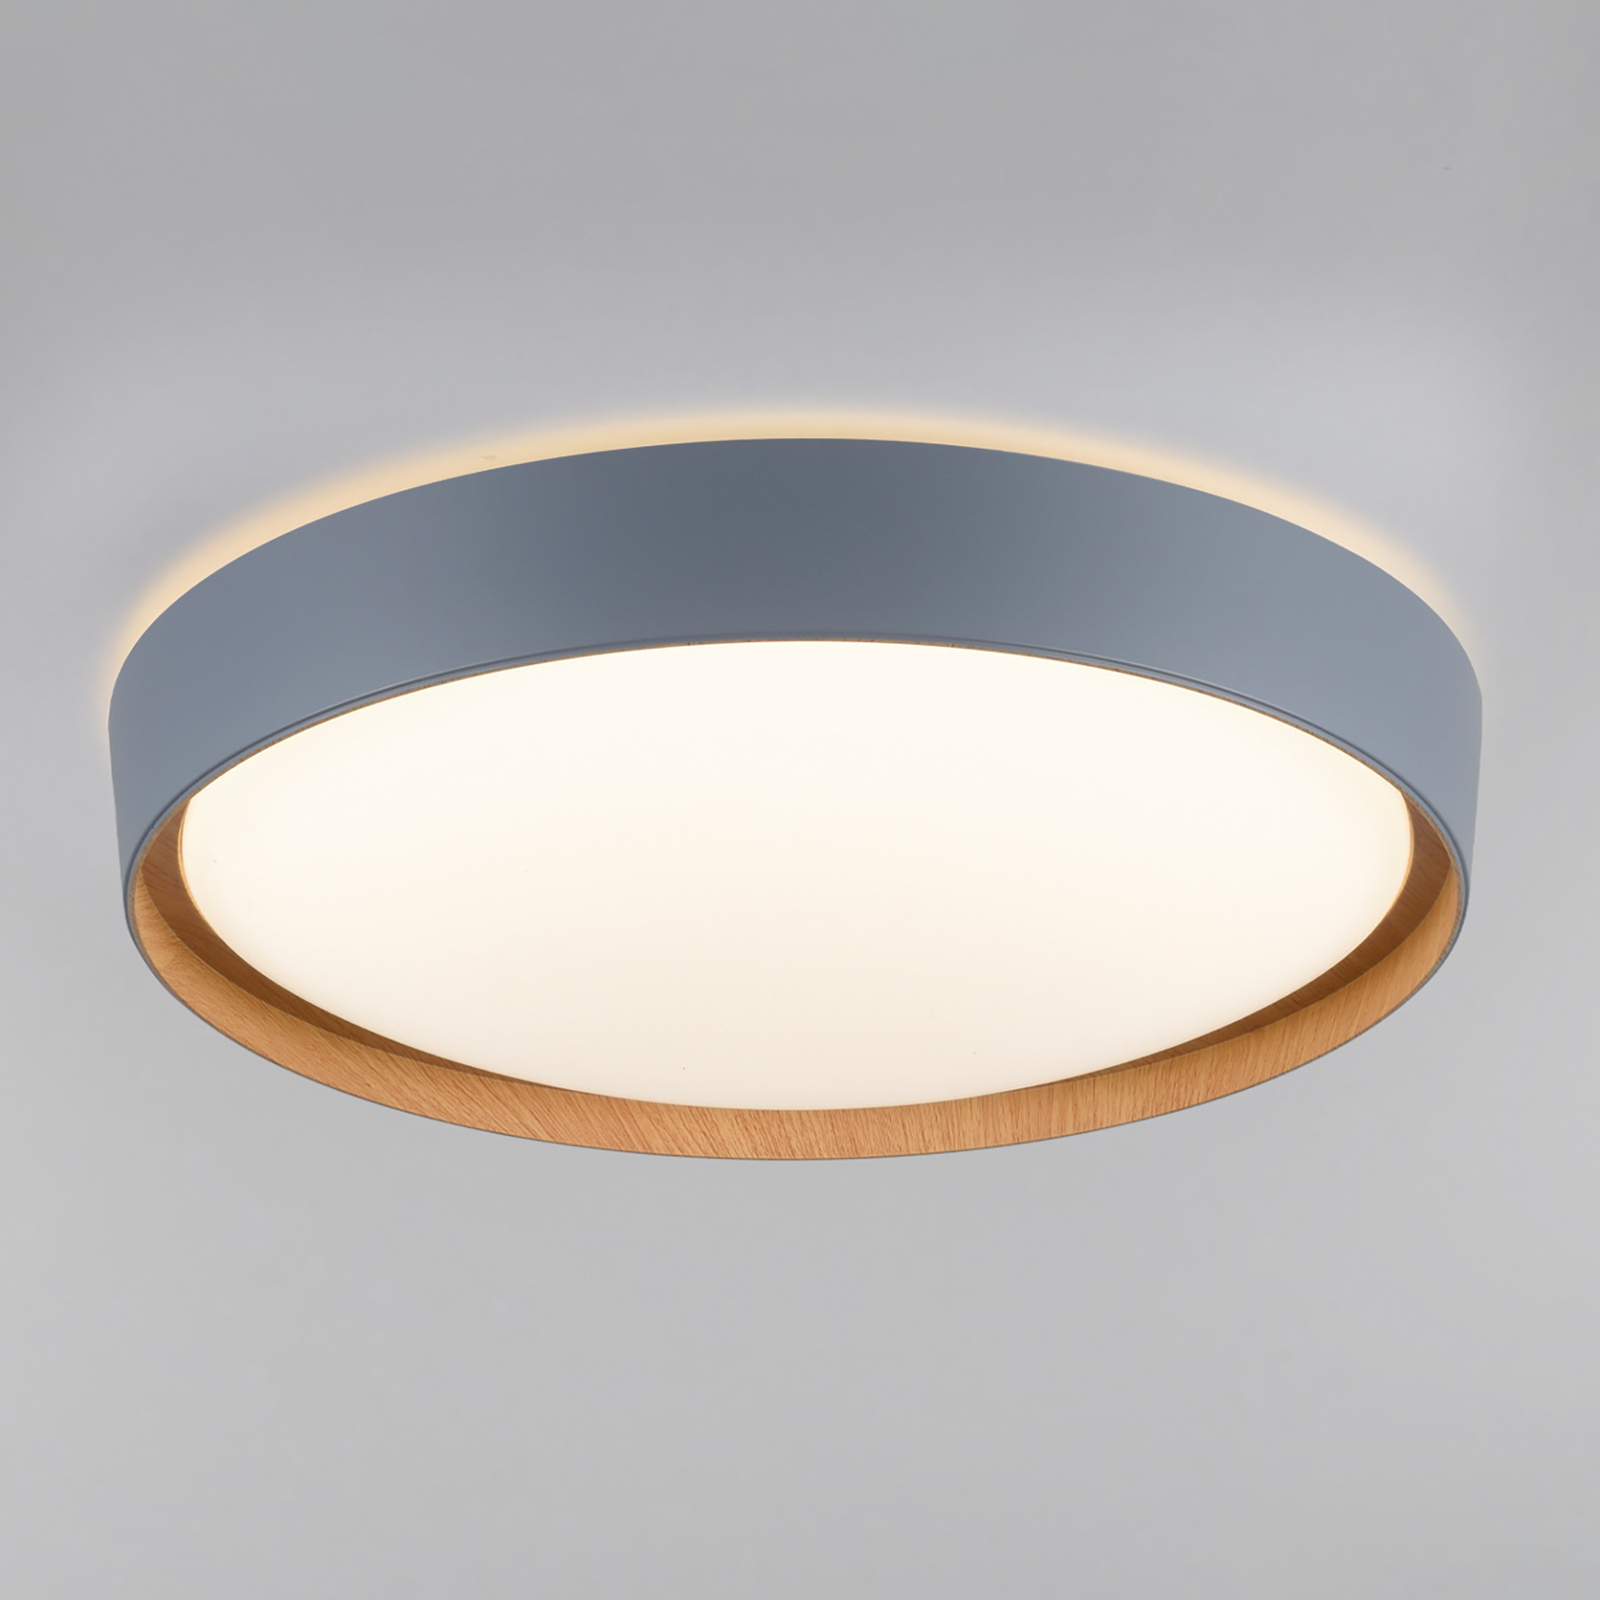 Paul Neuhaus Q-EMILIA LED ceiling light, grey/wood